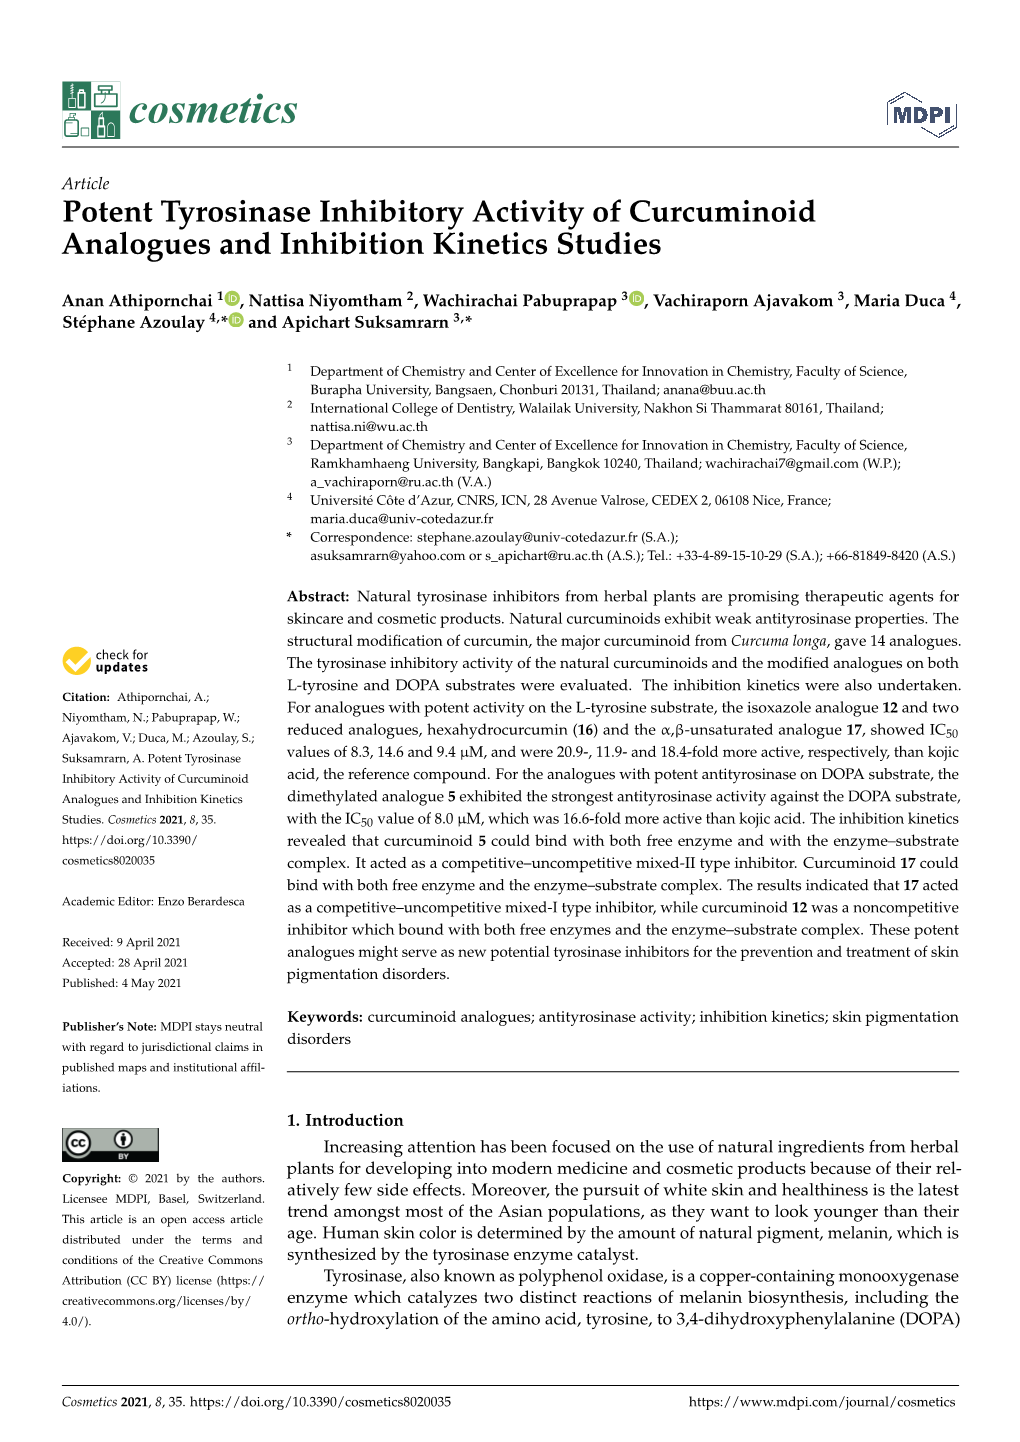 Potent Tyrosinase Inhibitory Activity of Curcuminoid Analogues and Inhibition Kinetics Studies